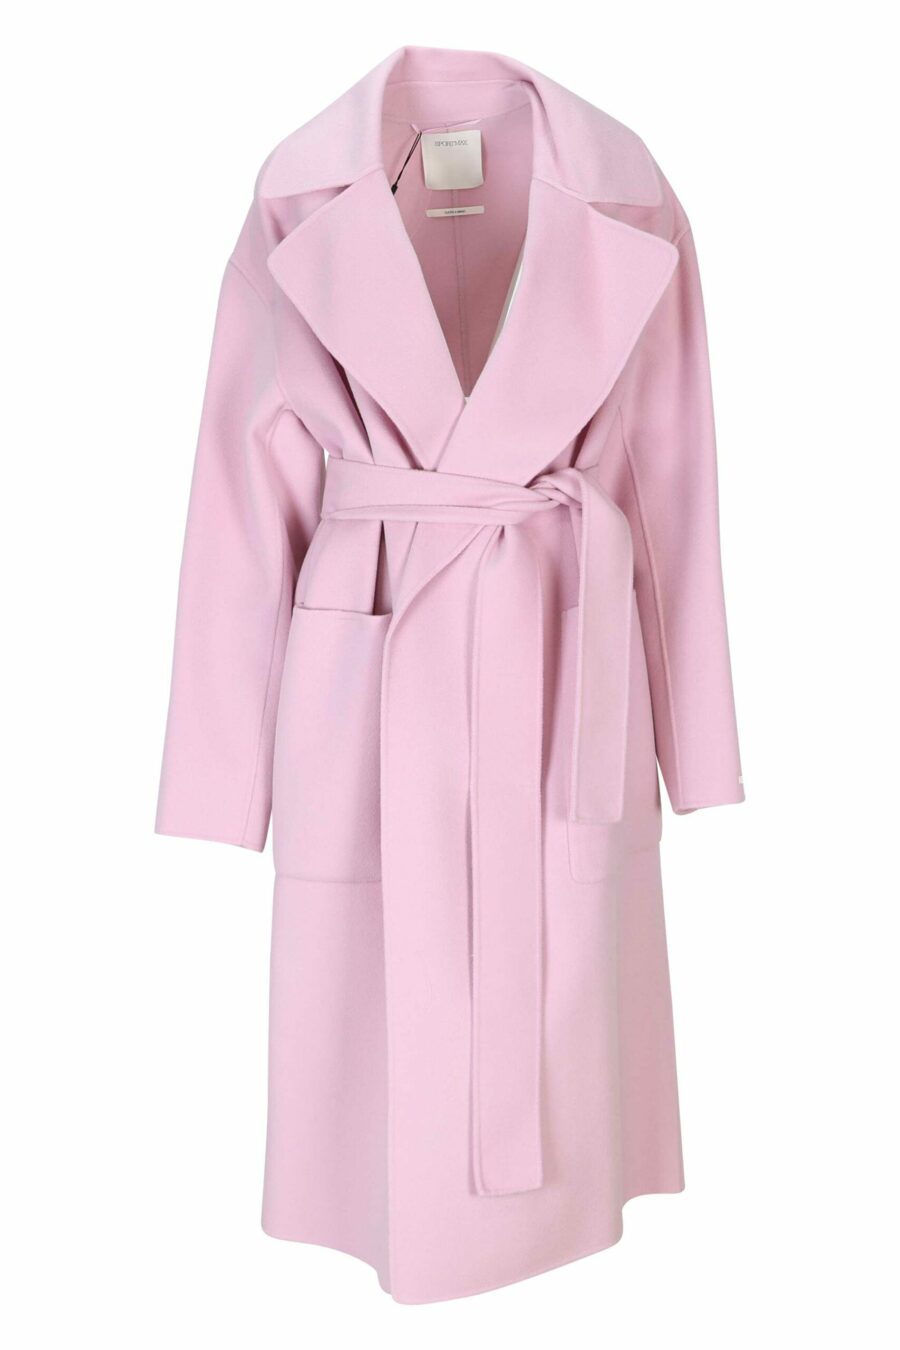 Abrigo rosa largo de lana con bolsillos - 20110241060802 scaled